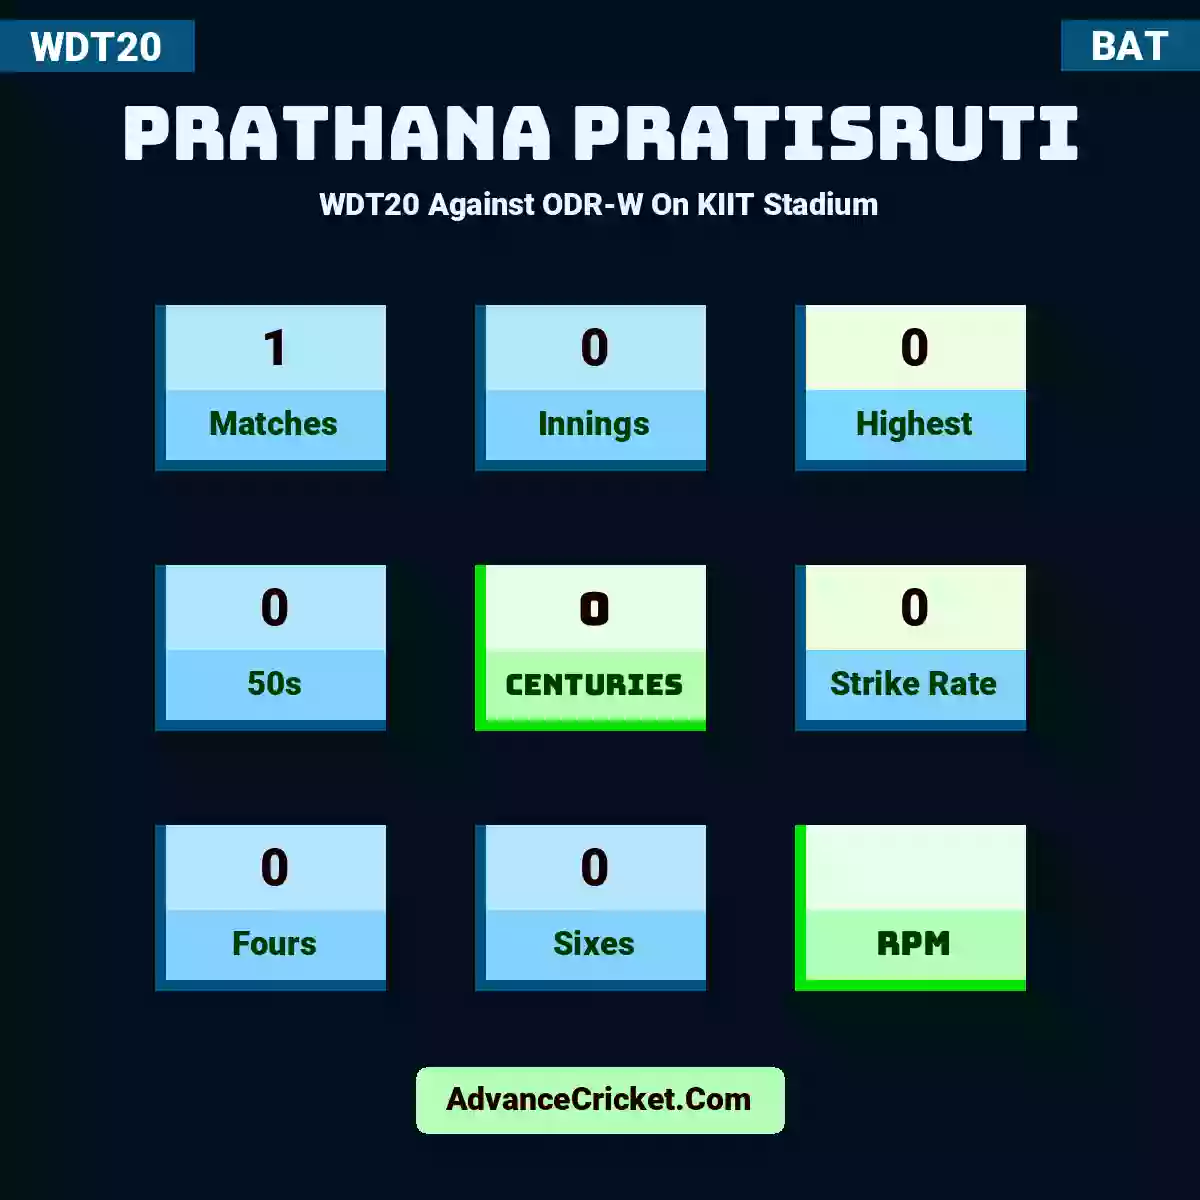 Prathana Pratisruti WDT20  Against ODR-W On KIIT Stadium, Prathana Pratisruti played 1 matches, scored 0 runs as highest, 0 half-centuries, and 0 centuries, with a strike rate of 0. P.Pratisruti hit 0 fours and 0 sixes.